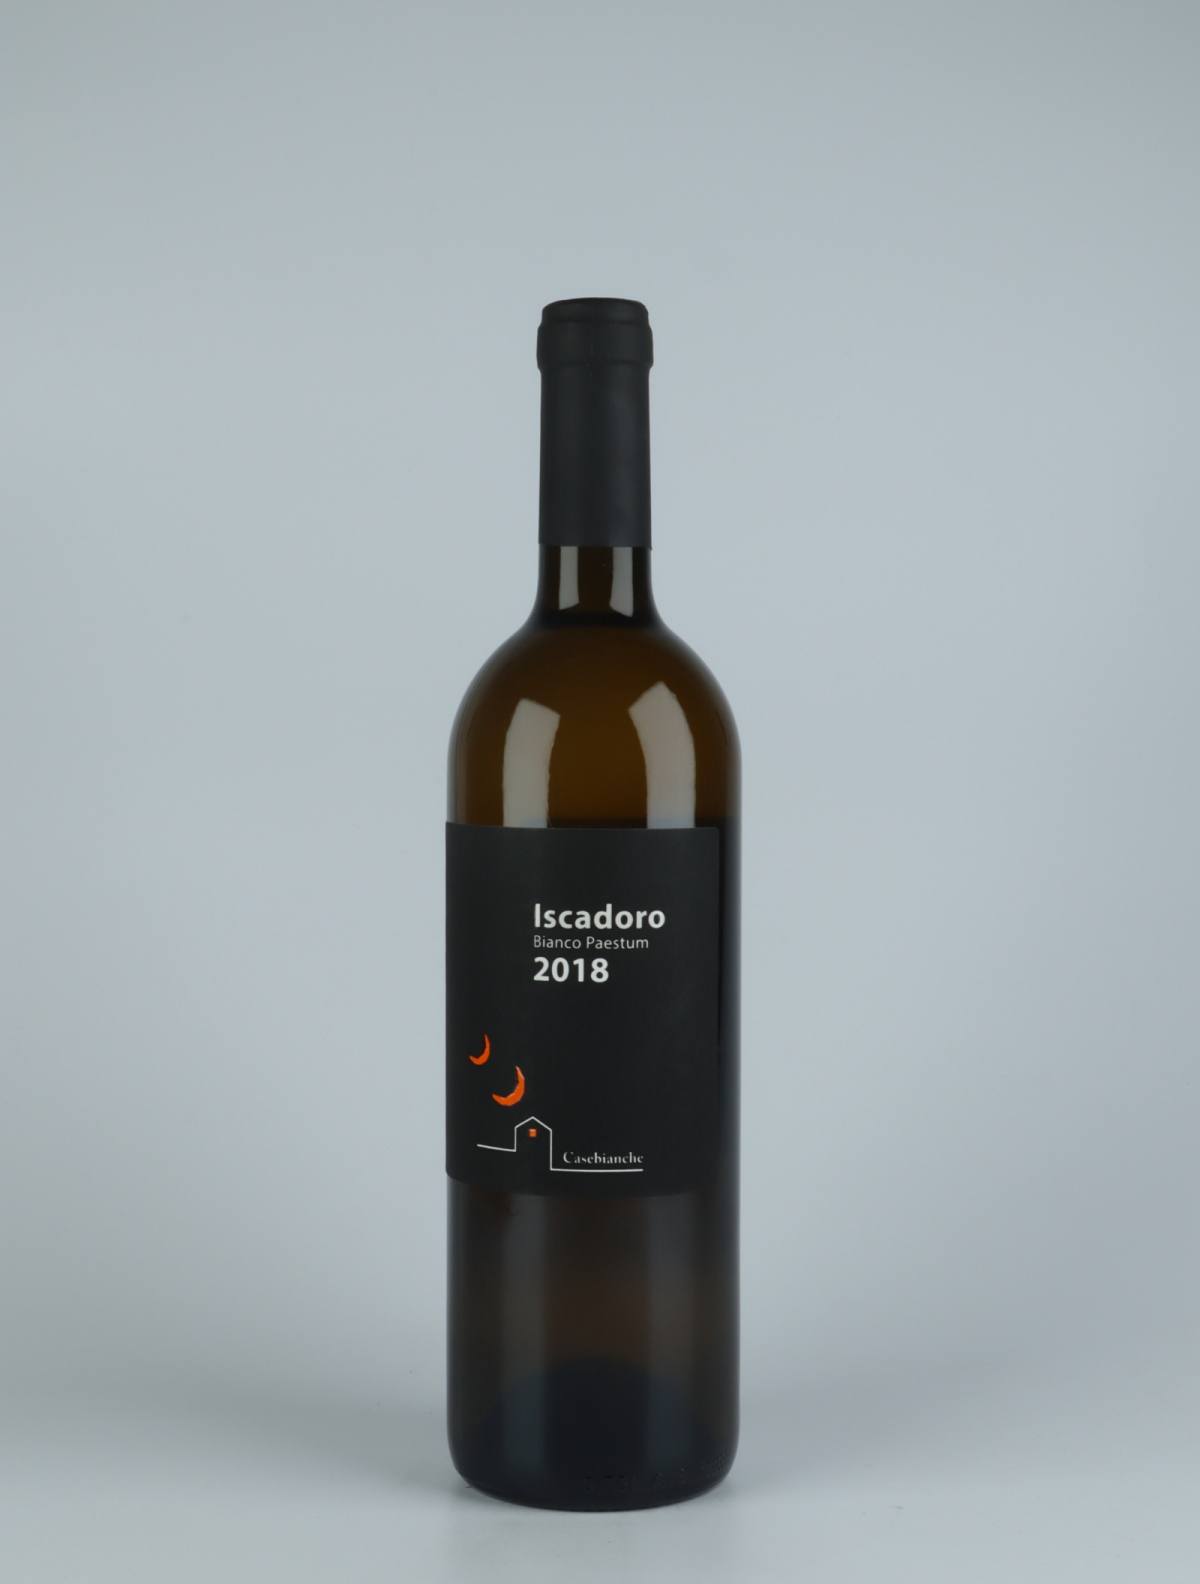 A bottle 2018 Iscadoro Orange wine from Casebianche, Campania in Italy